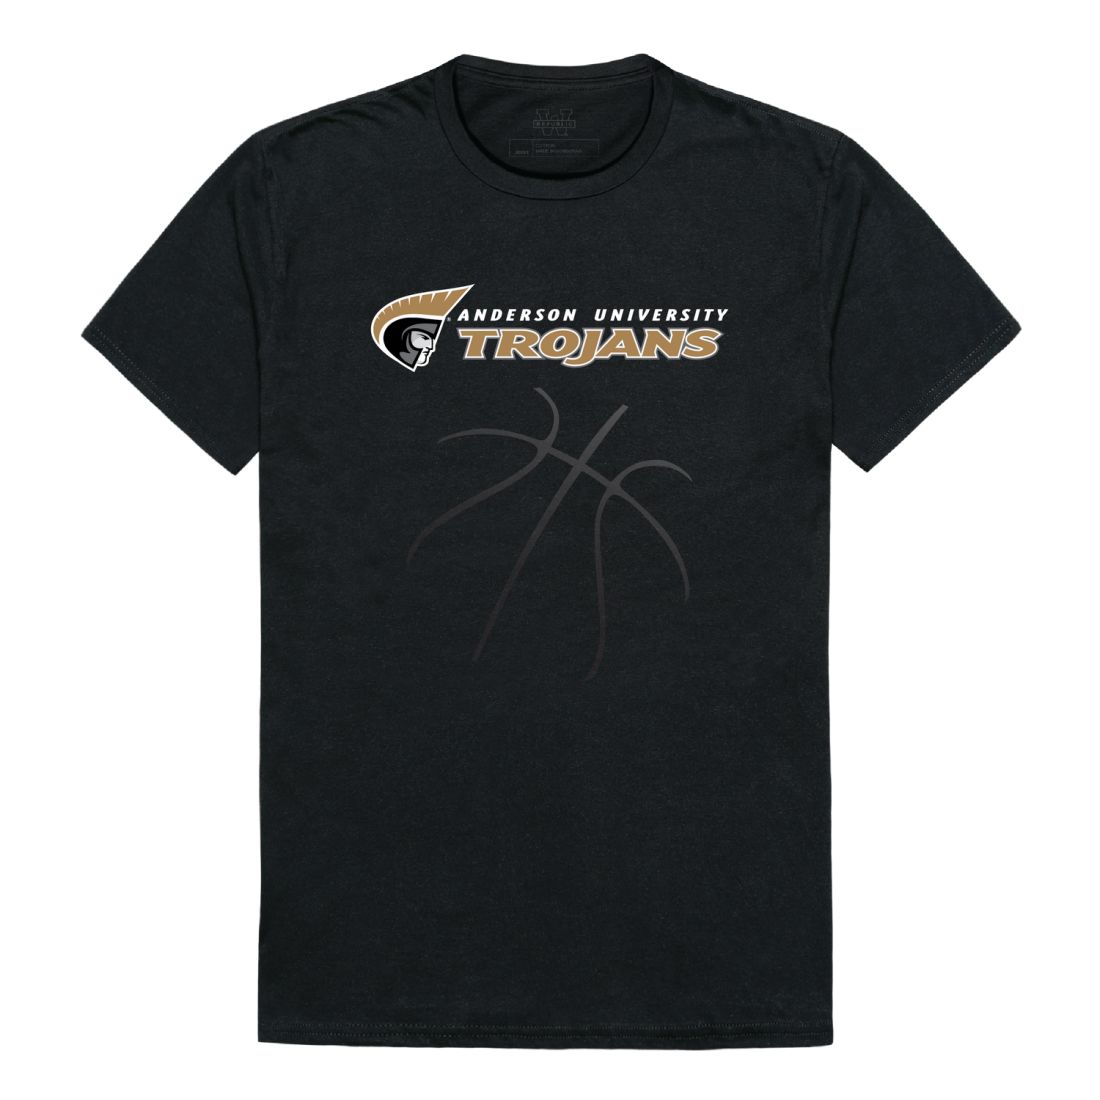 Anderson University Trojans Basketball T-Shirt